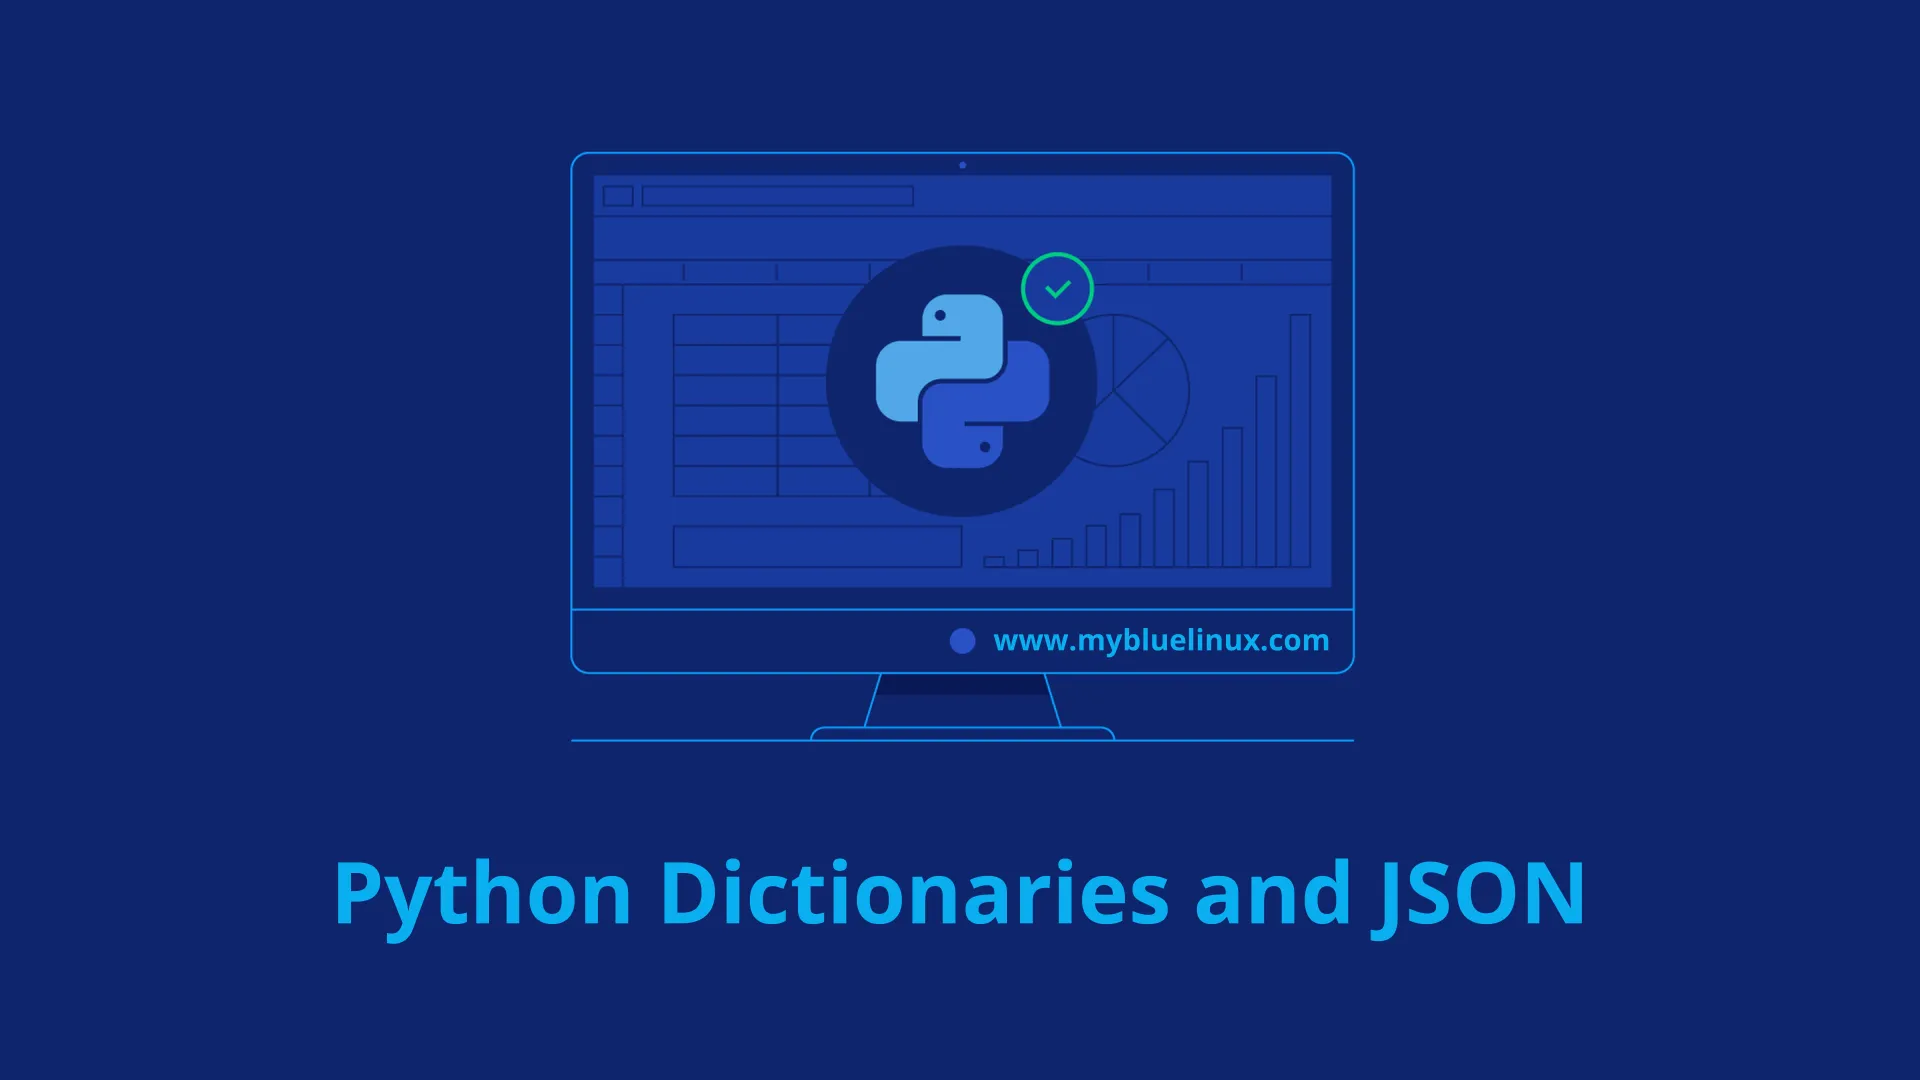 Python Dictionaries and JSON